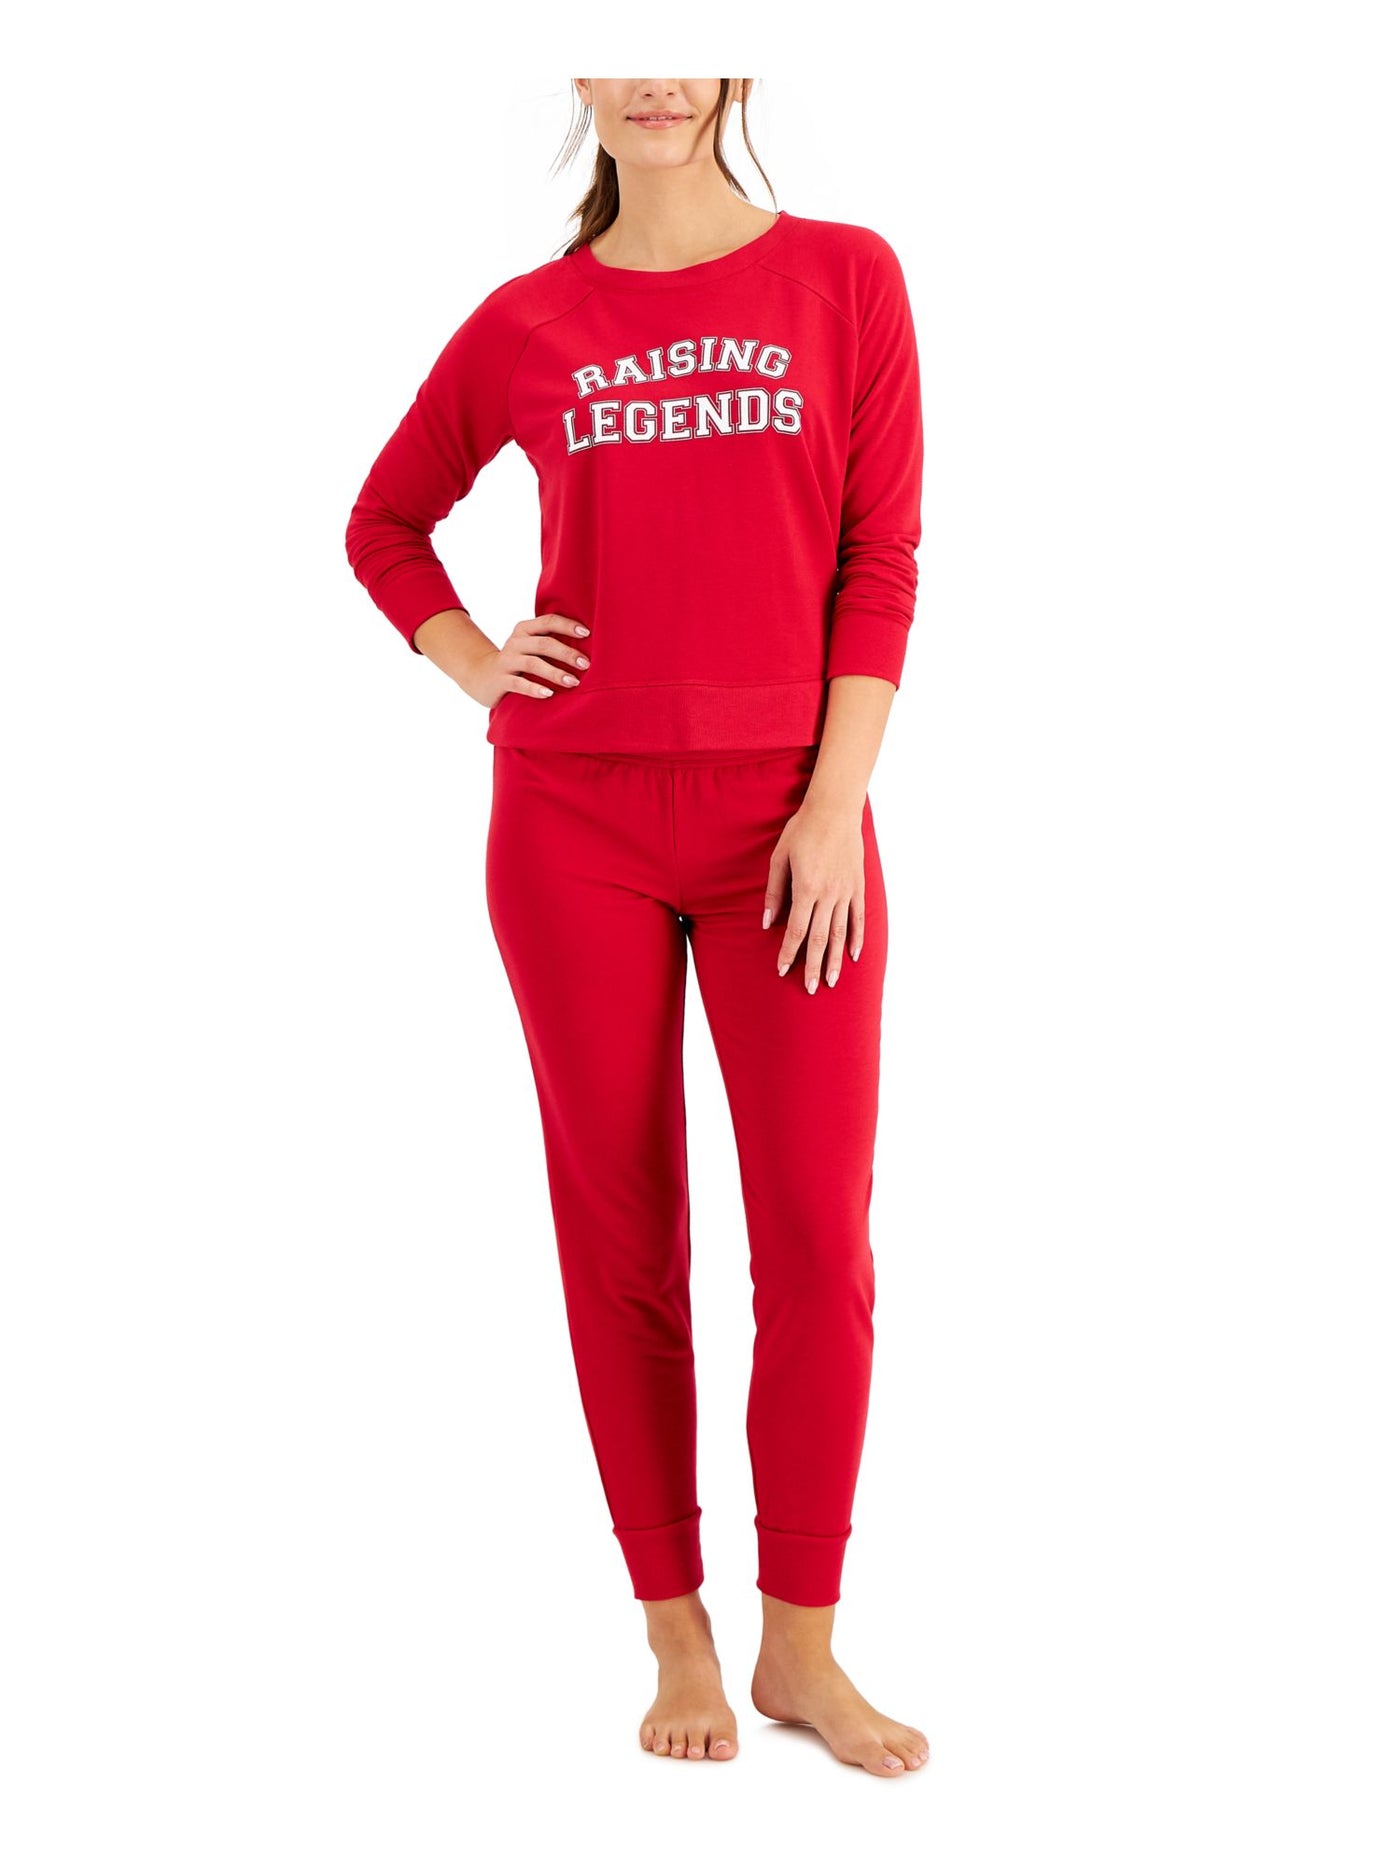 FAMILY PJs Womens Red Printed Top Elastic Band Long Sleeve Lounge Pants Pajamas S